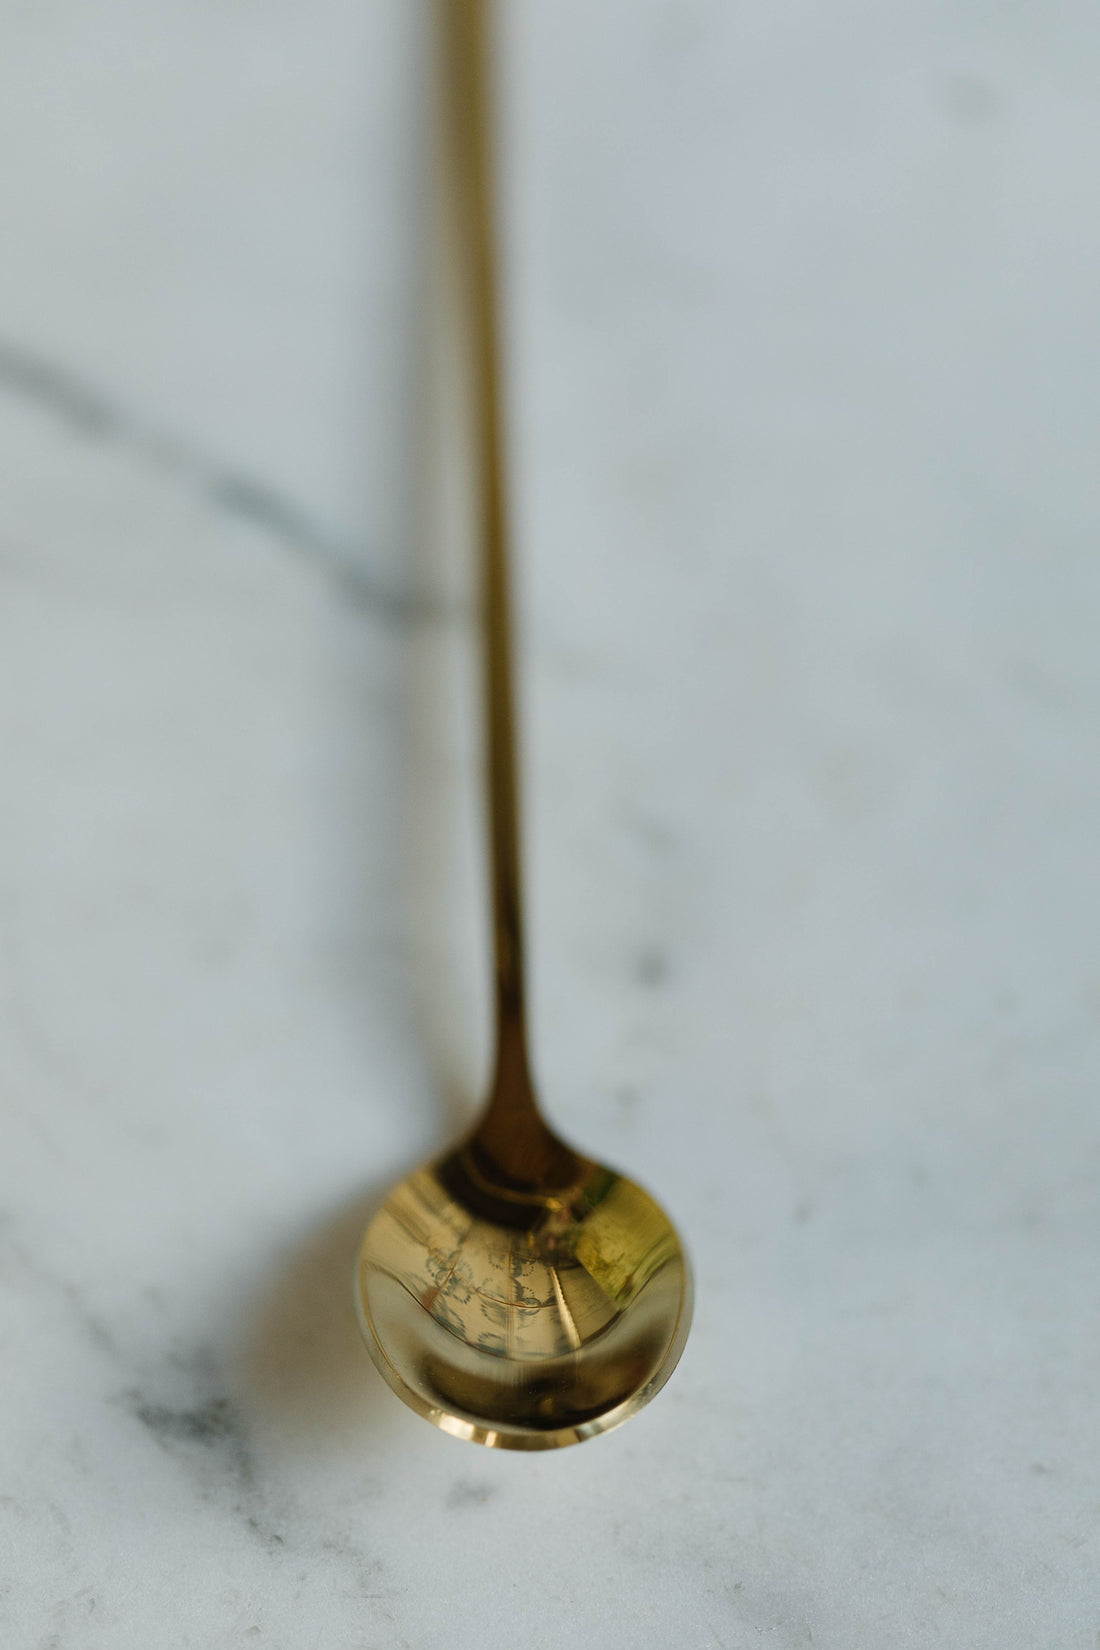 Long Gold Spoon